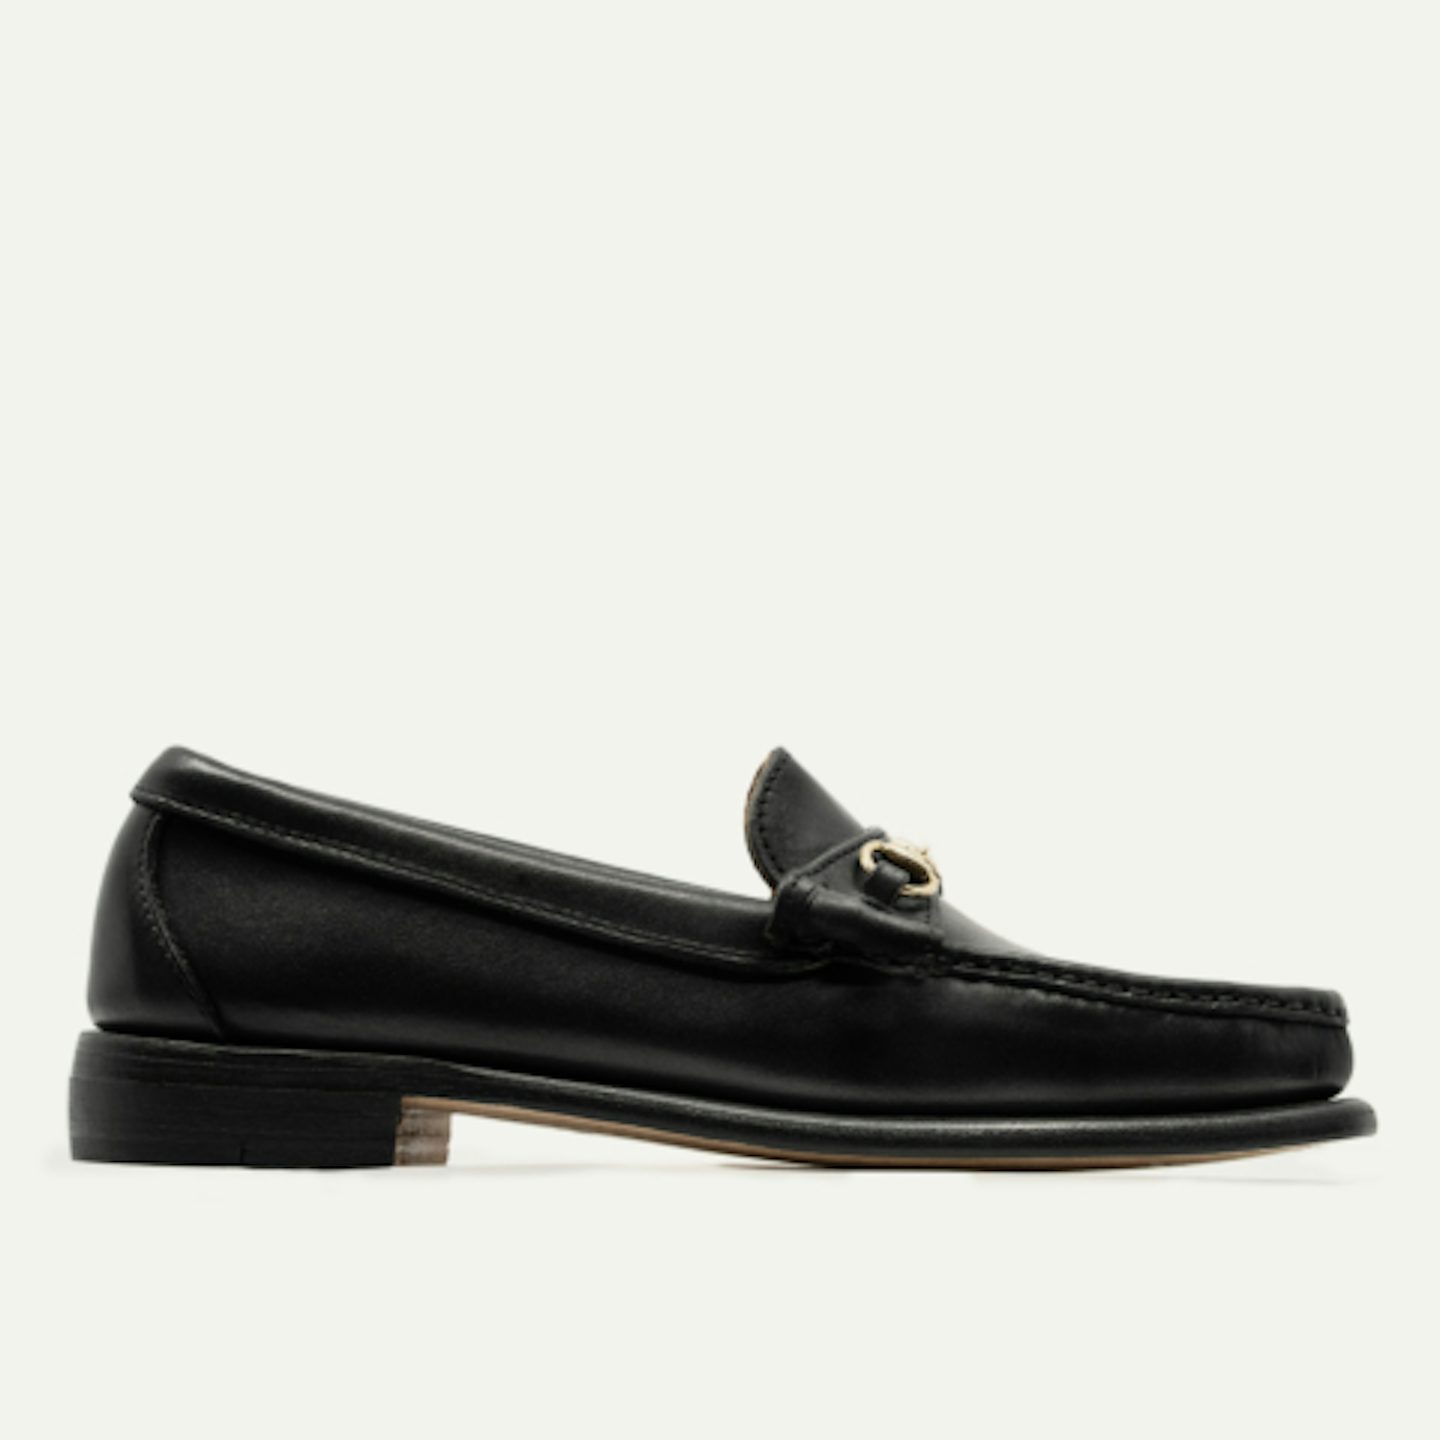 Bit Loafer - Black Latigo, Leather Sole with Dovetail Toplift